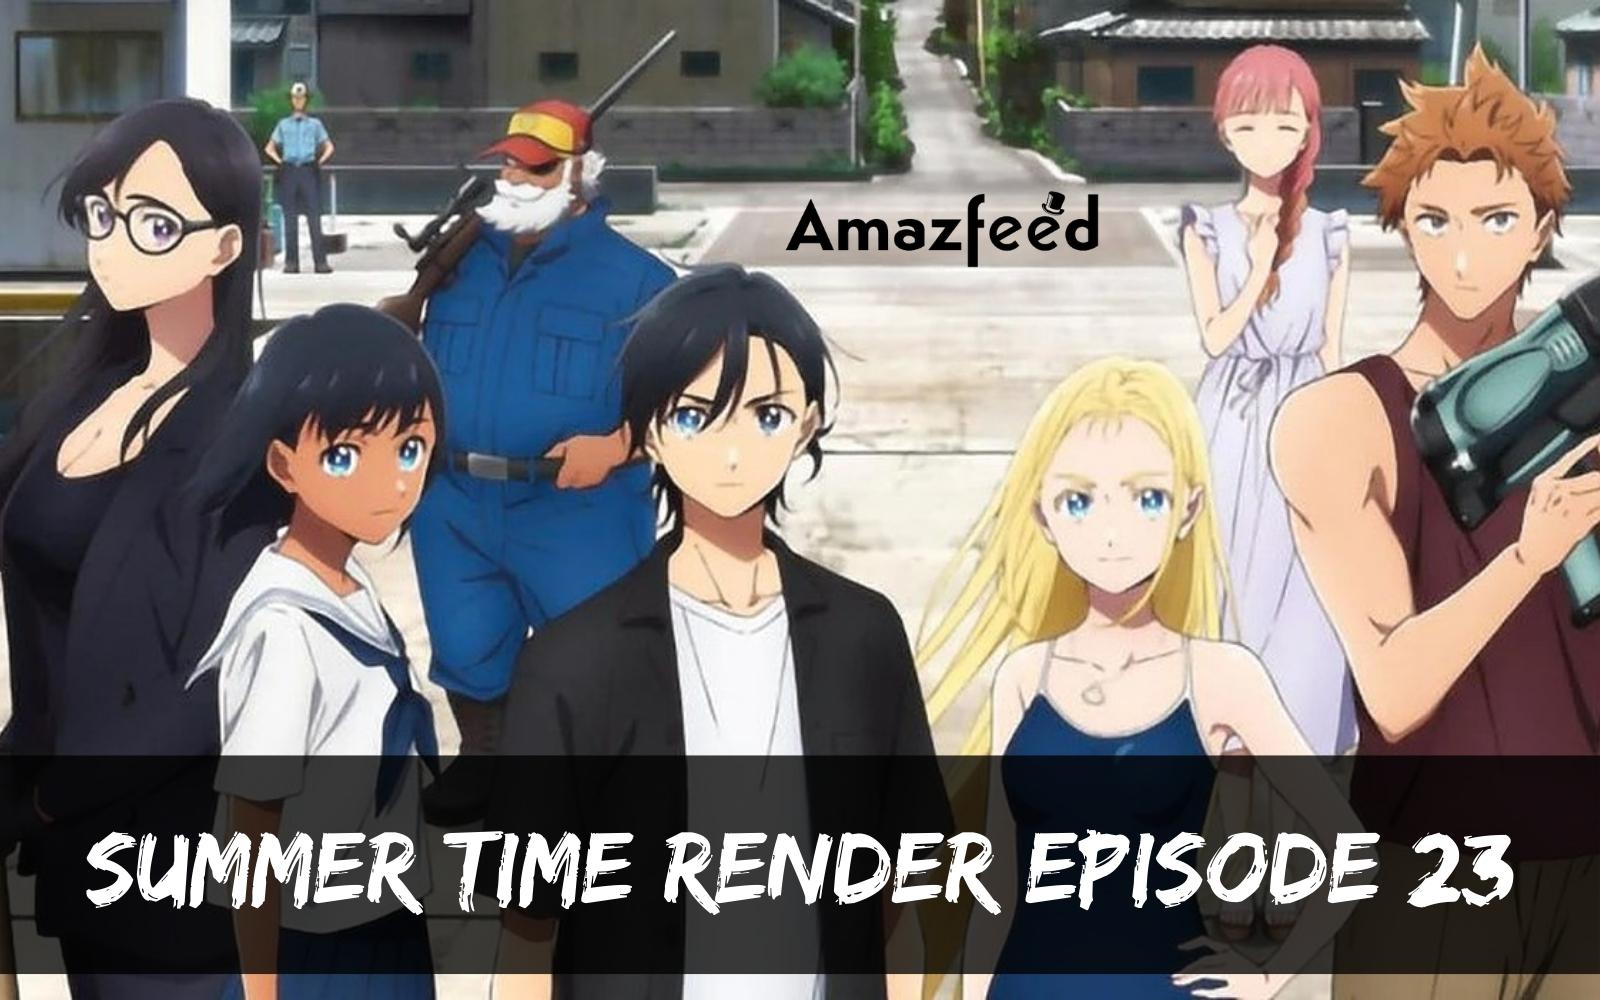 Summertime Render Episode 23 : Countdown, Release Date, Recap, Cast, Spoiler & Where to Watch